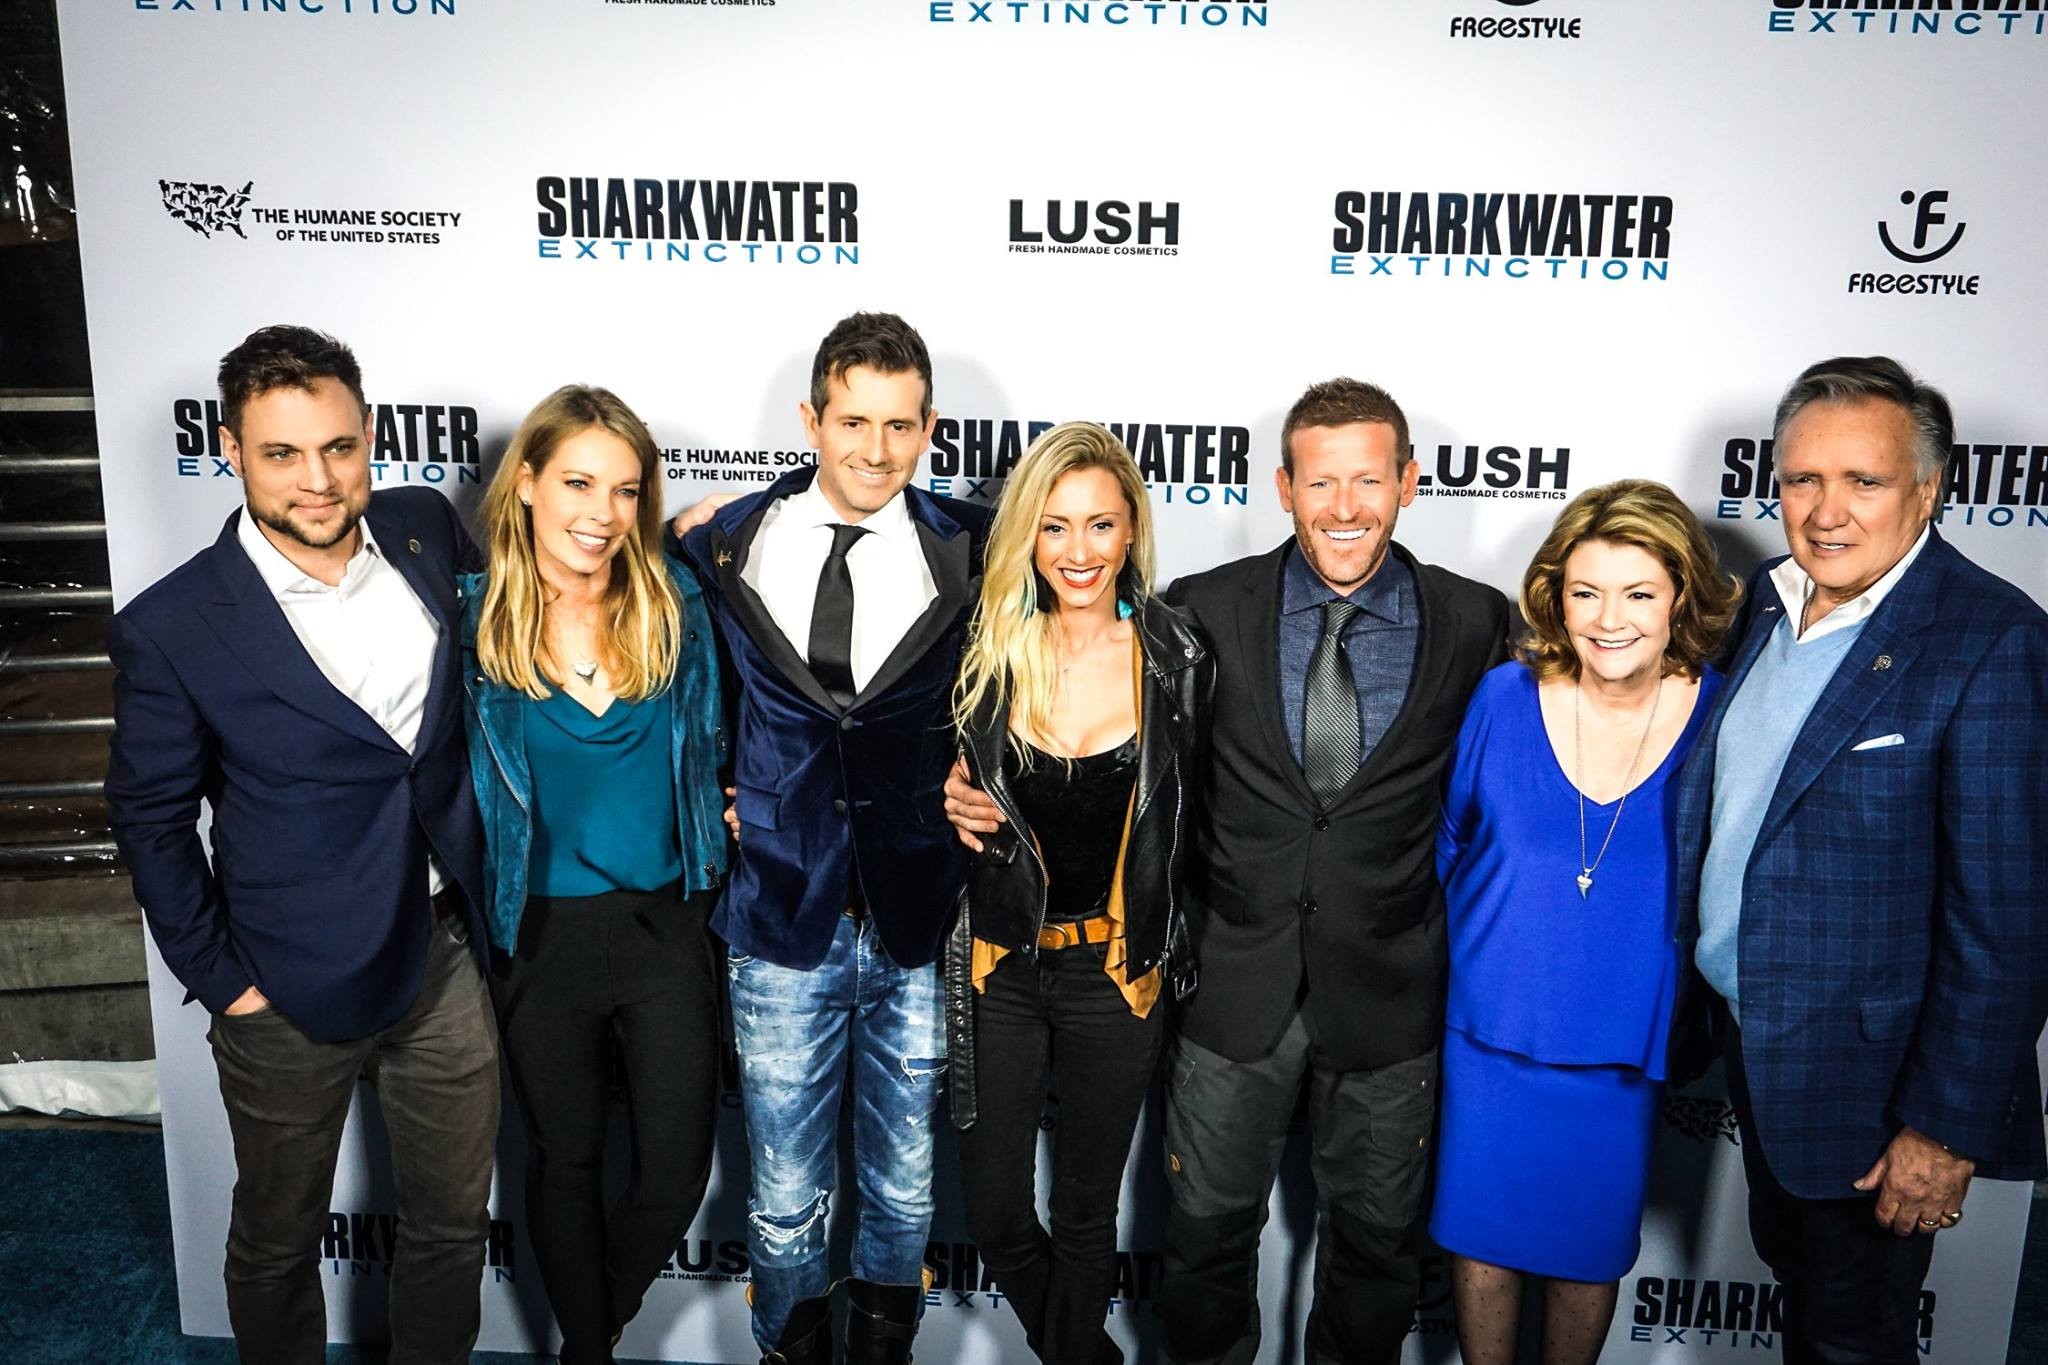 'Sharkwater Extinction' U.S. Premiere